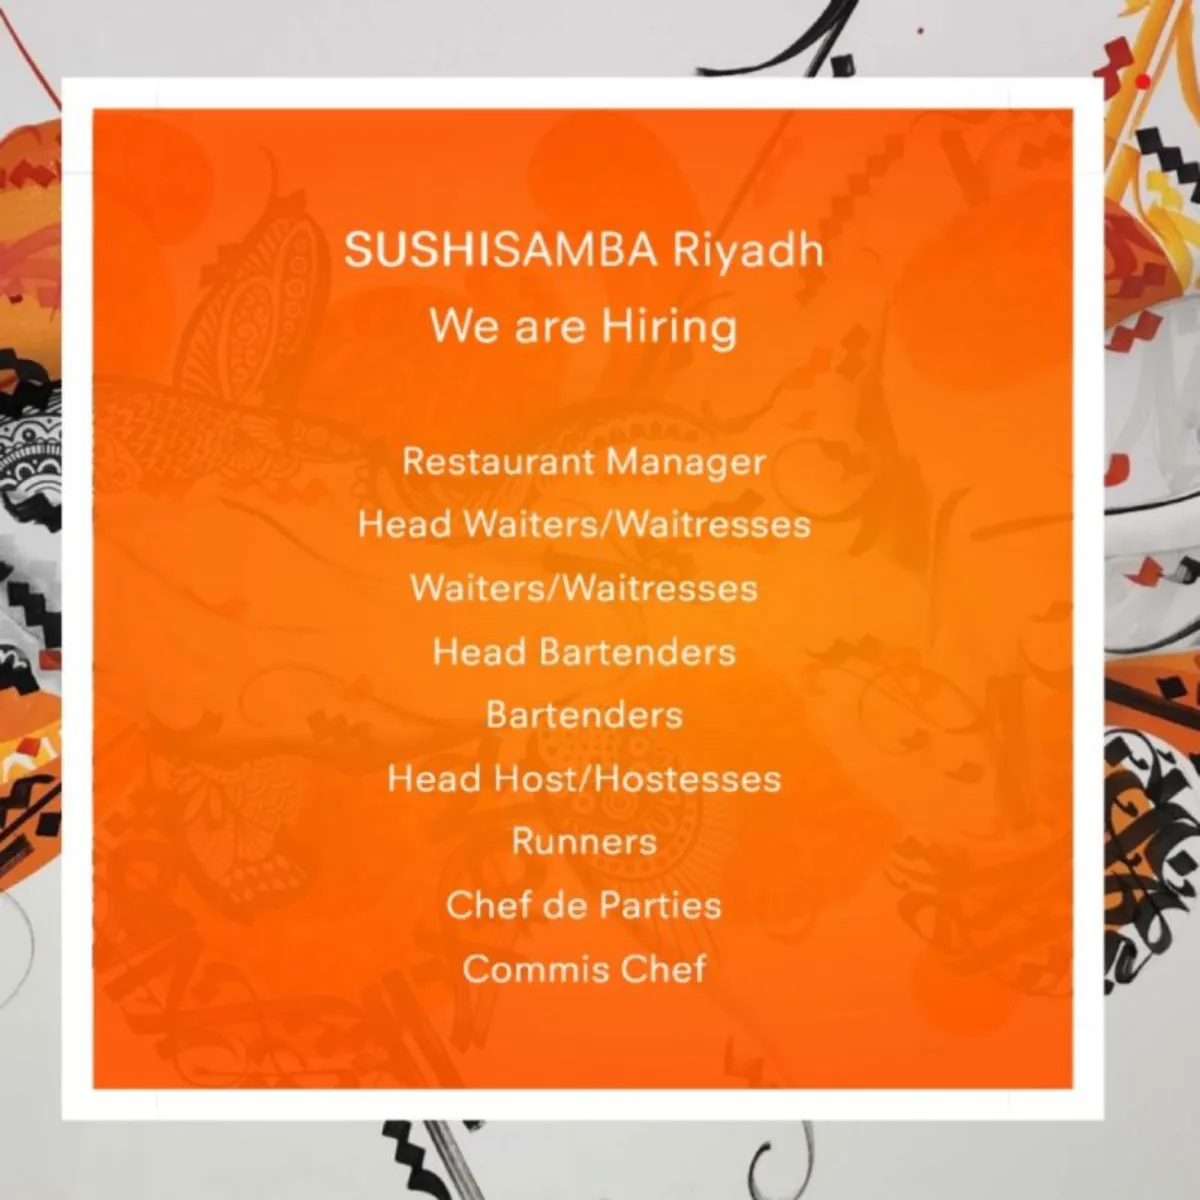 Exciting Career Opportunities at Sushisamba Riyadh